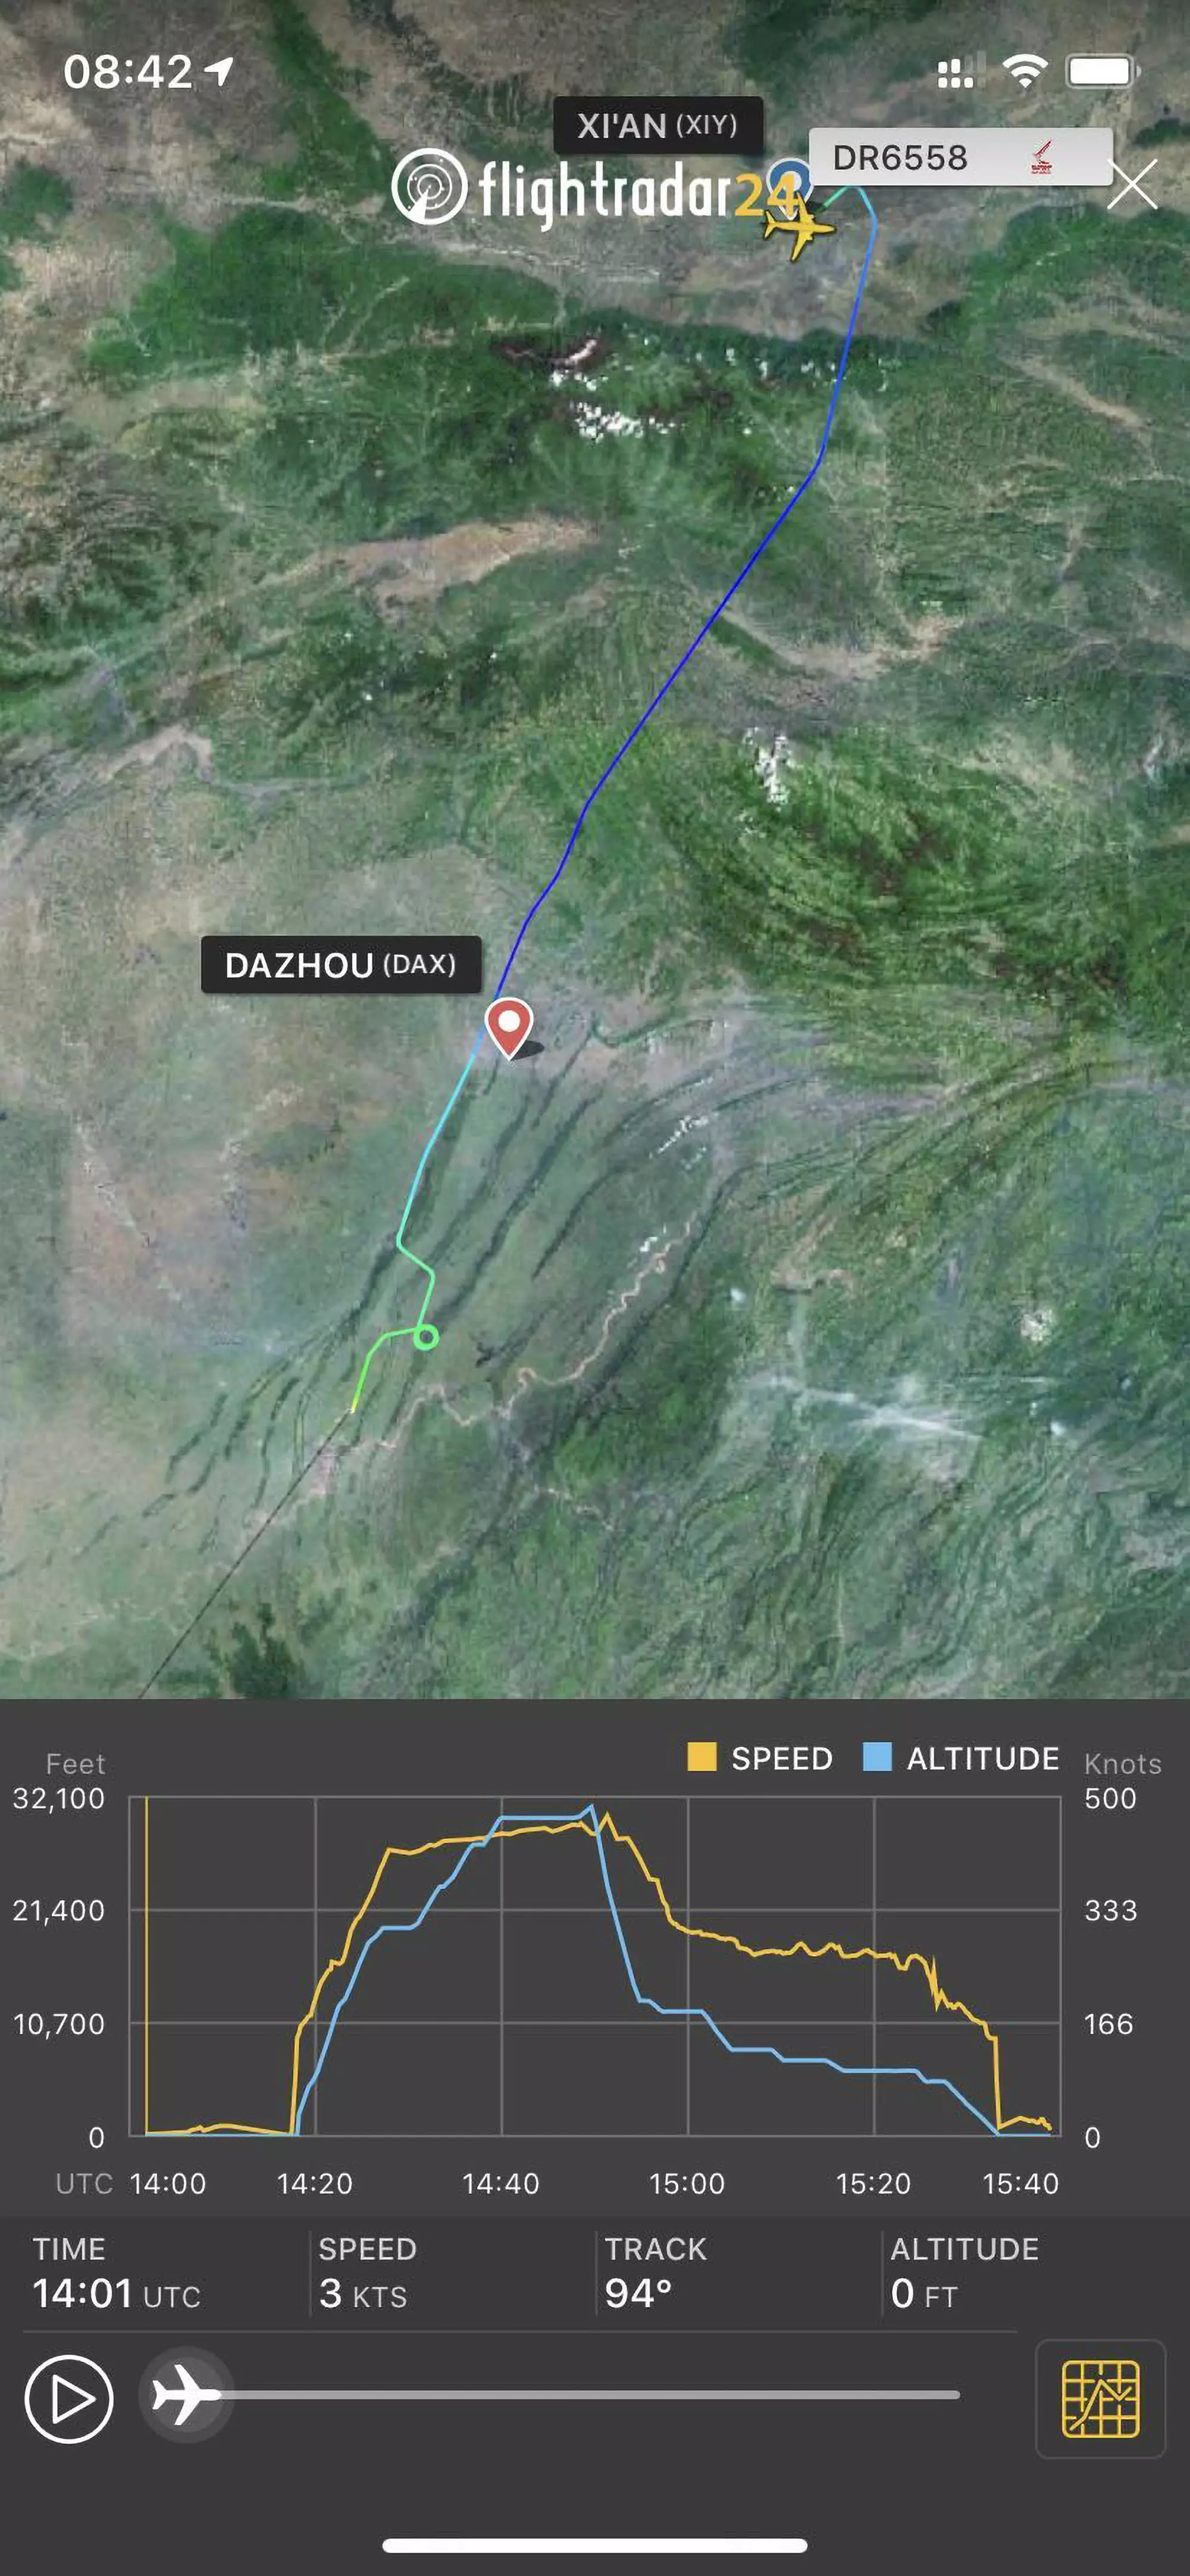 Flight-tracking data.